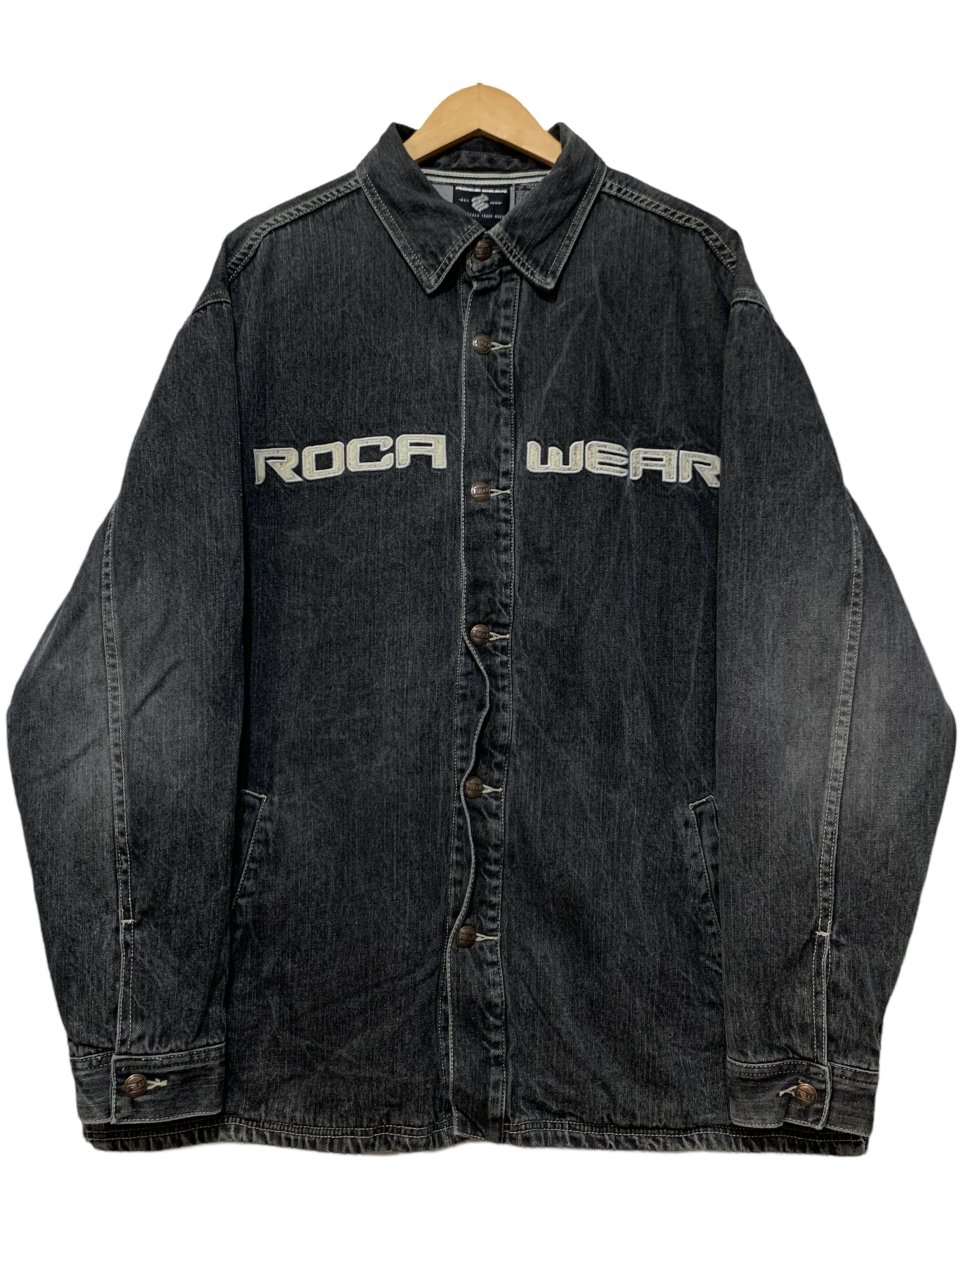 00s ROCA WEAR Thermal Lined Black Denim Shirt Jacket 黒 L